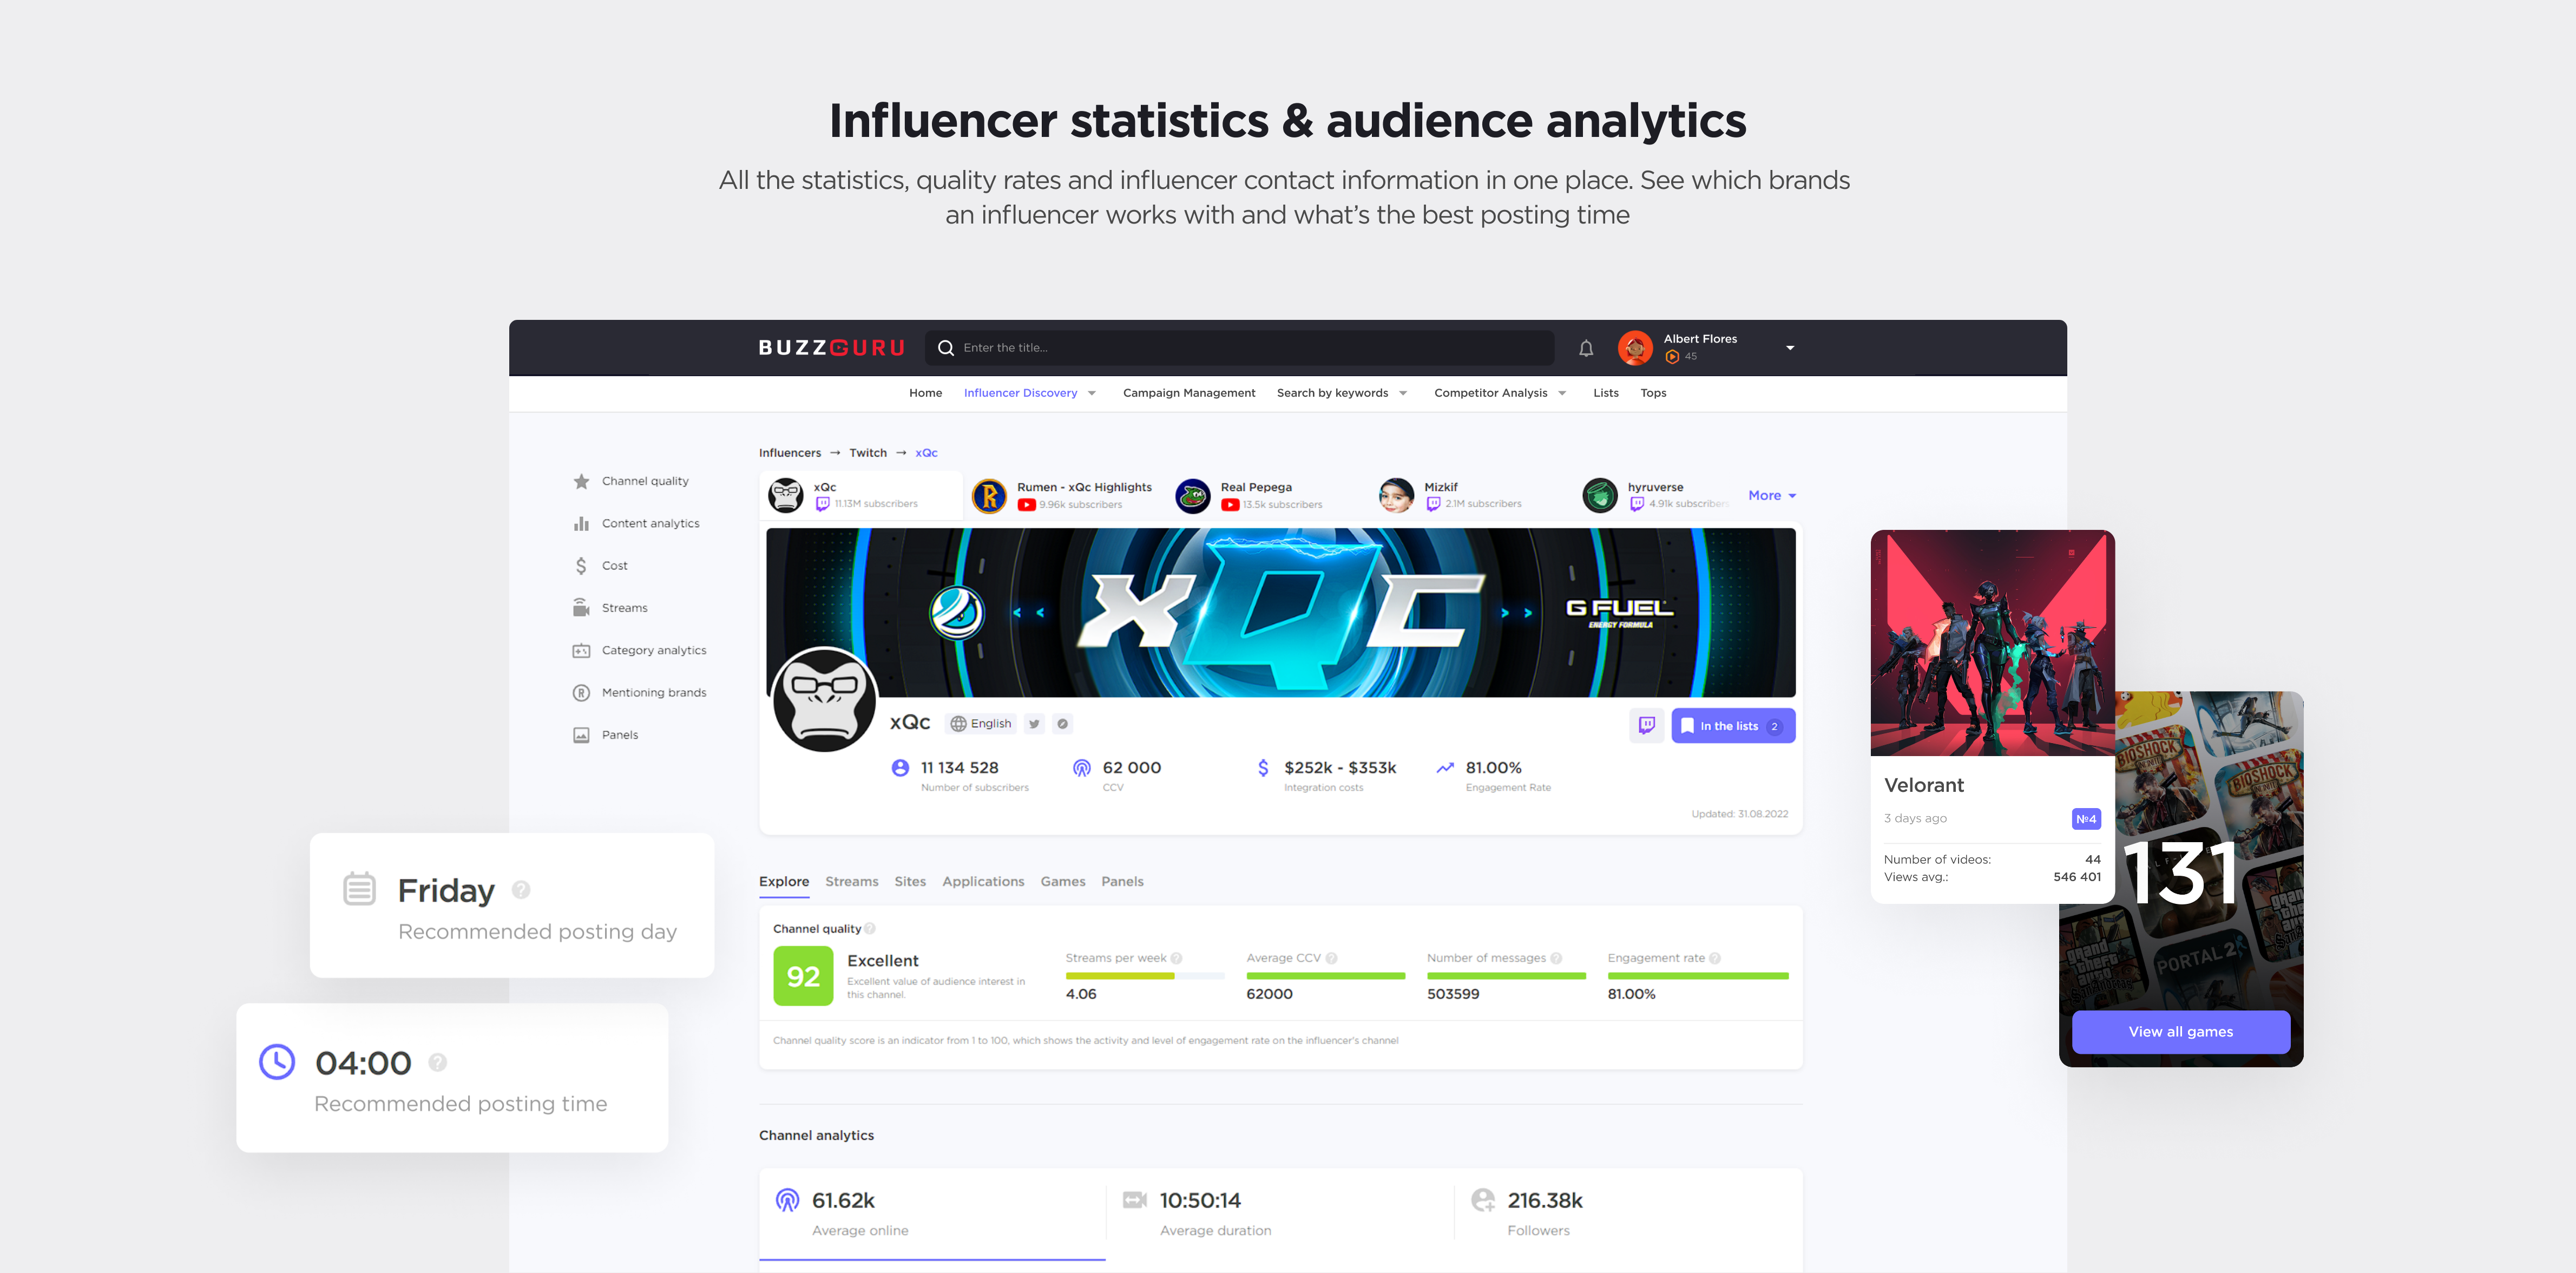 Influencer Statistics & Audience Analytics